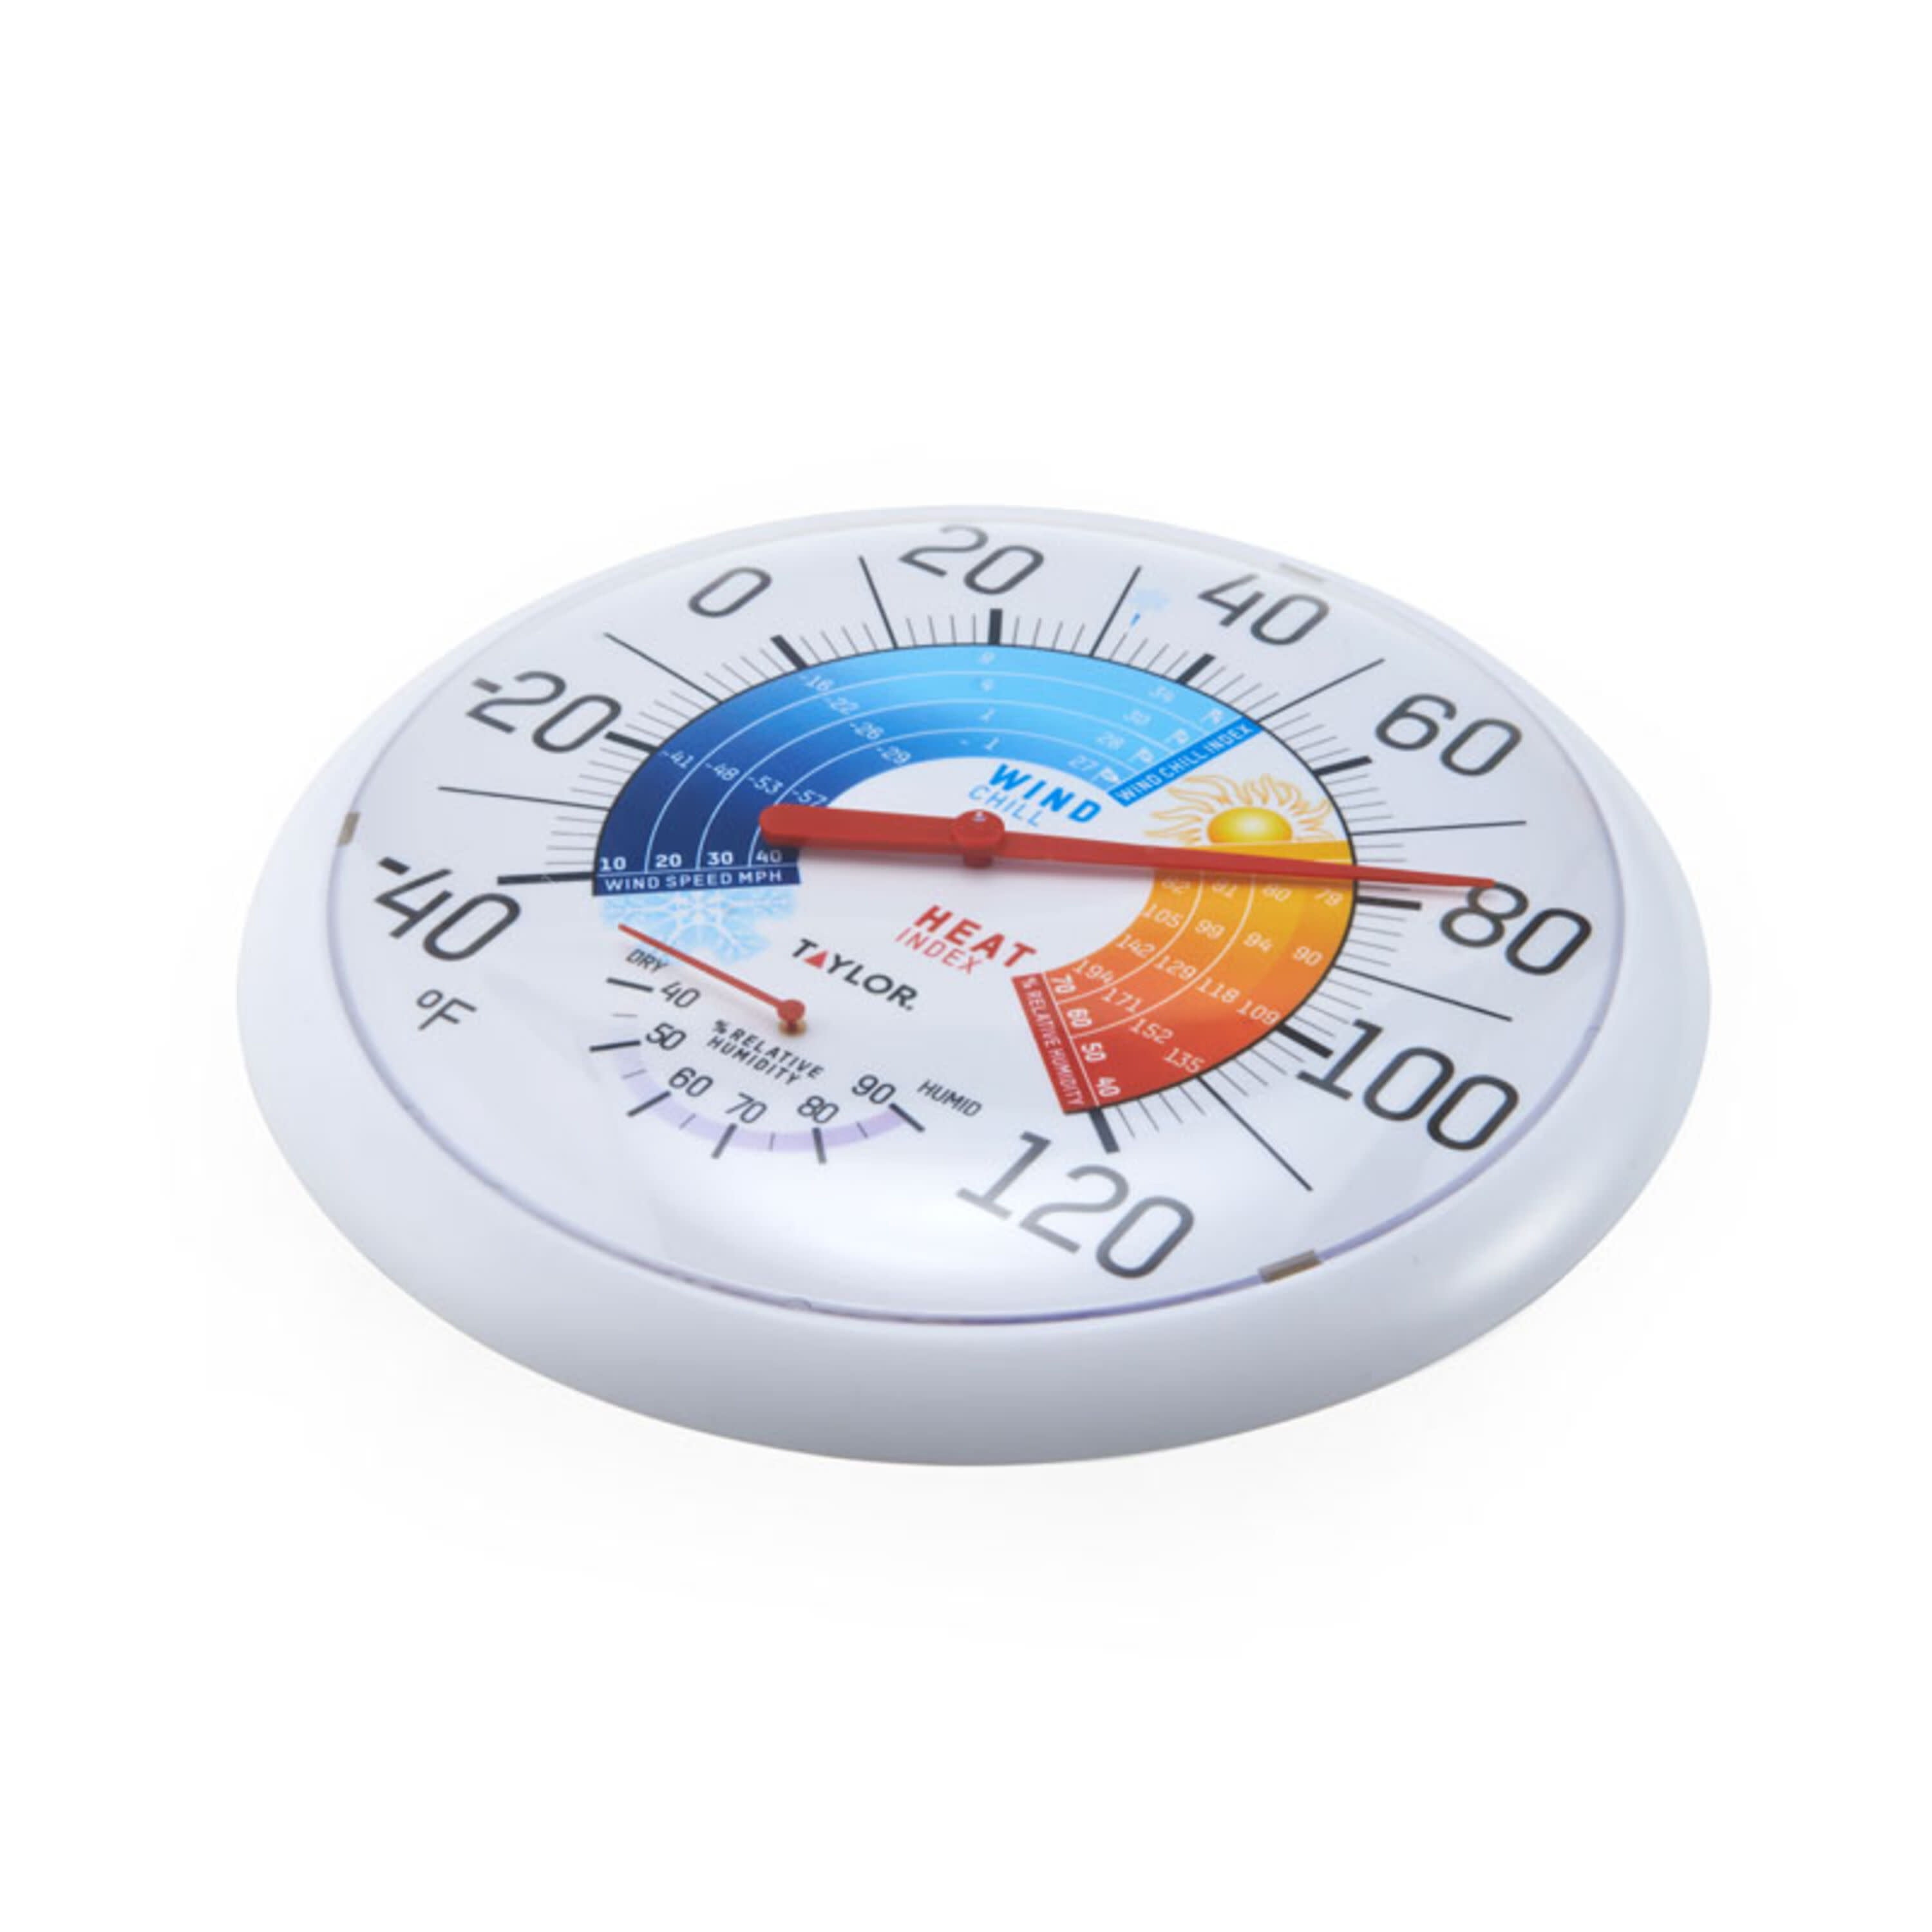 Taylor Fahrenheit Analog 20 to 100 F Hygrometer & Thermometer 5504, 1 -  Kroger